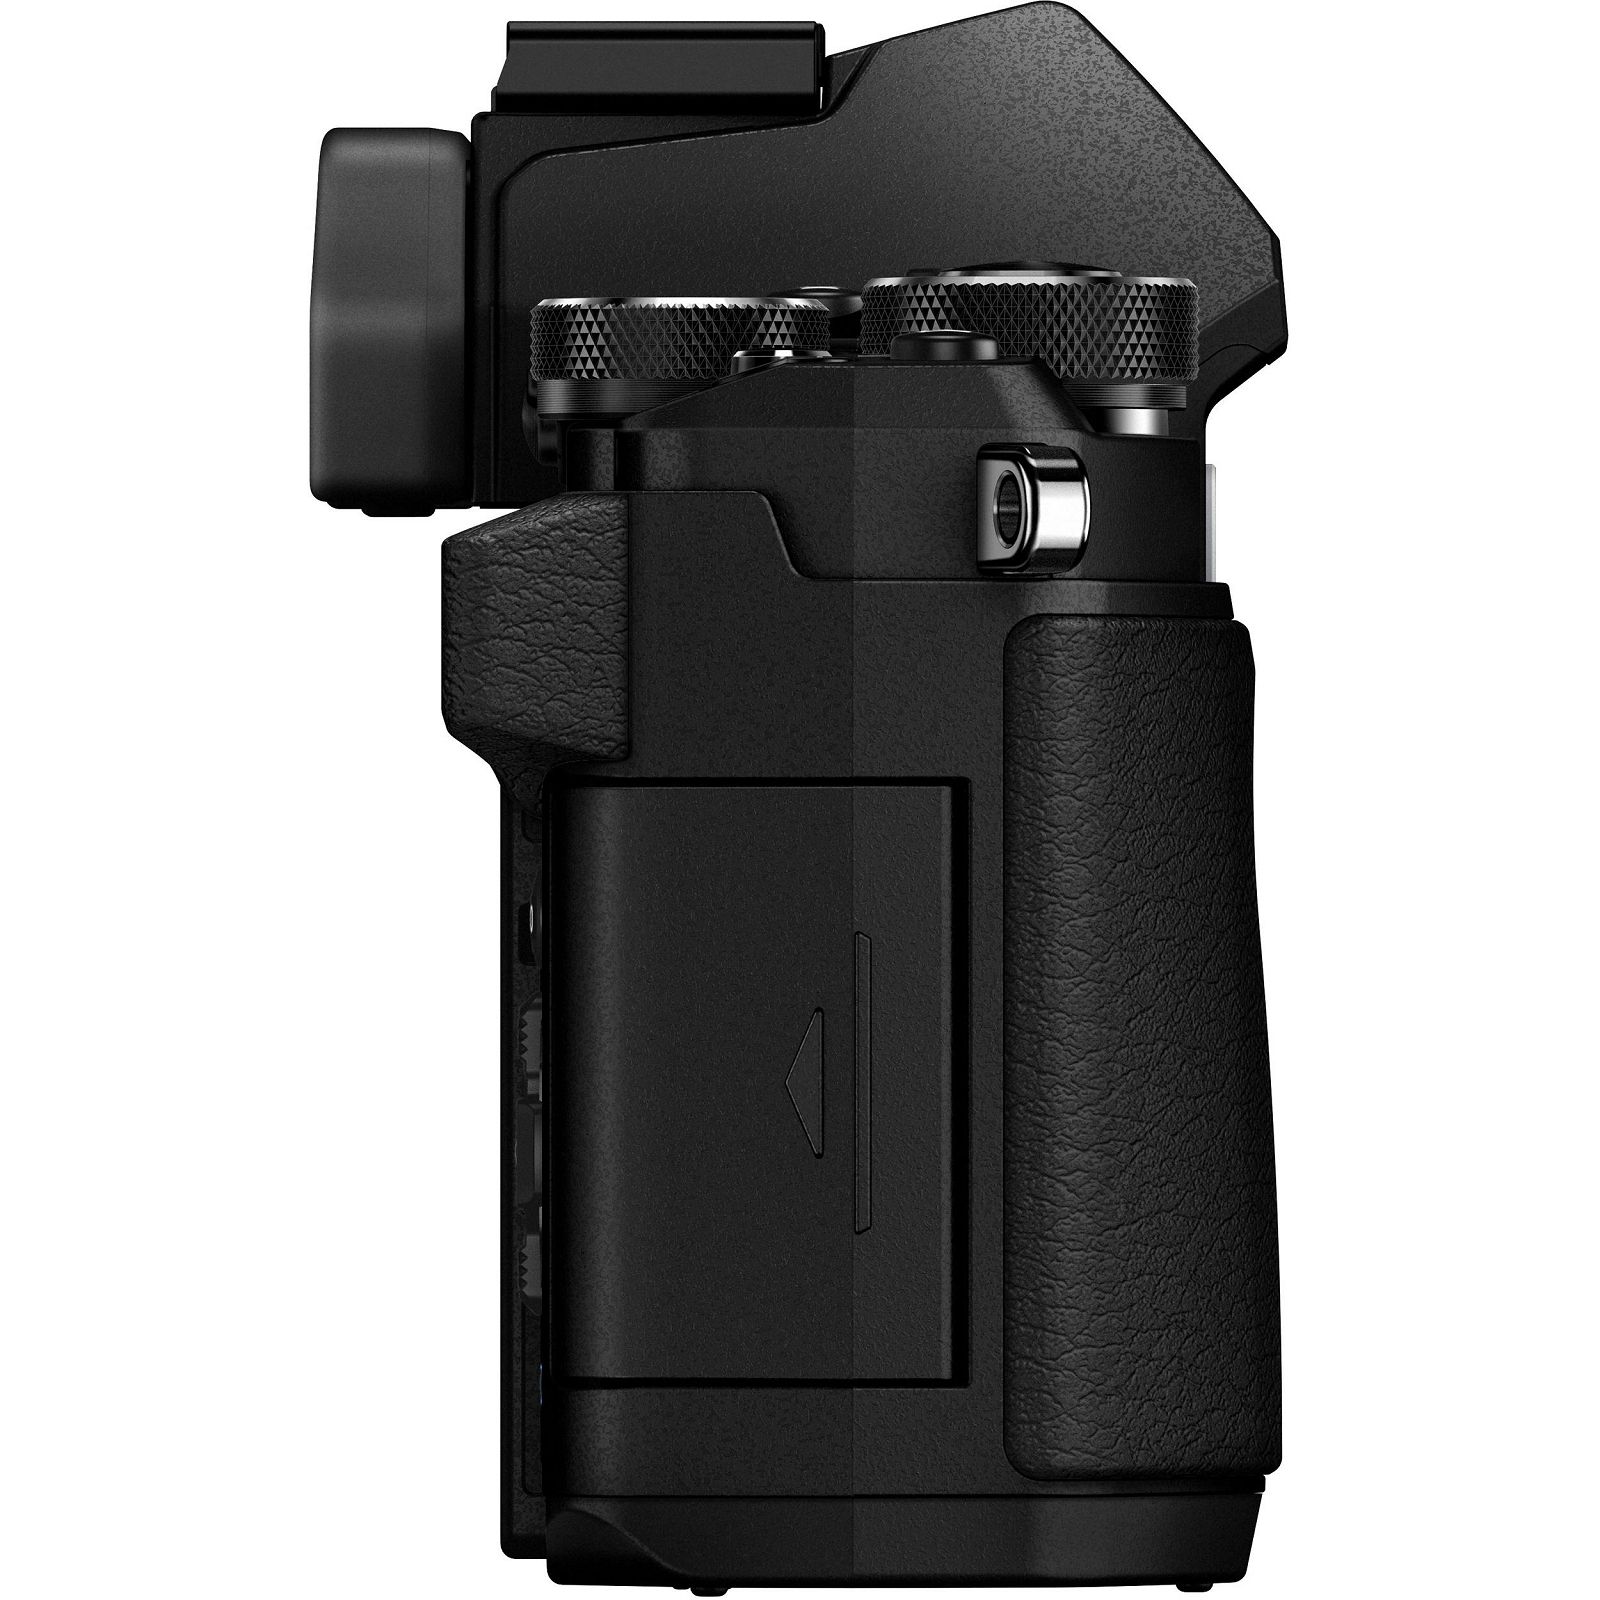 Olympus E-M5 II Body Black crni OM-D digitalni fotoaparat E-M5II Camera incl. Charger & Battery Micro Four Thirds MFT V207040BE000 - OLYMPUS BONUS